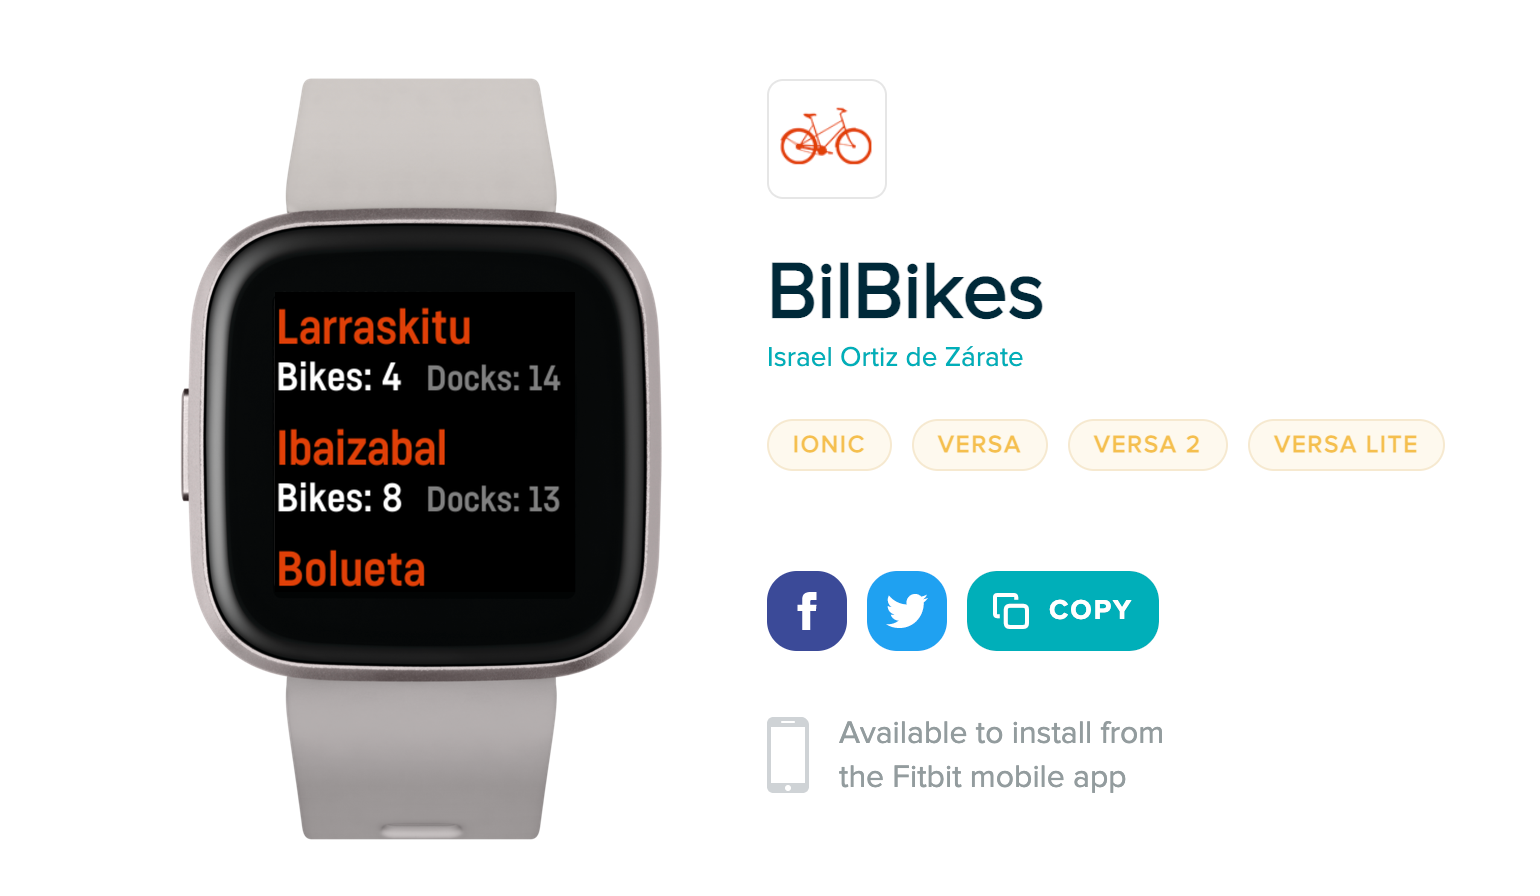 Bilbikes Fitbit app